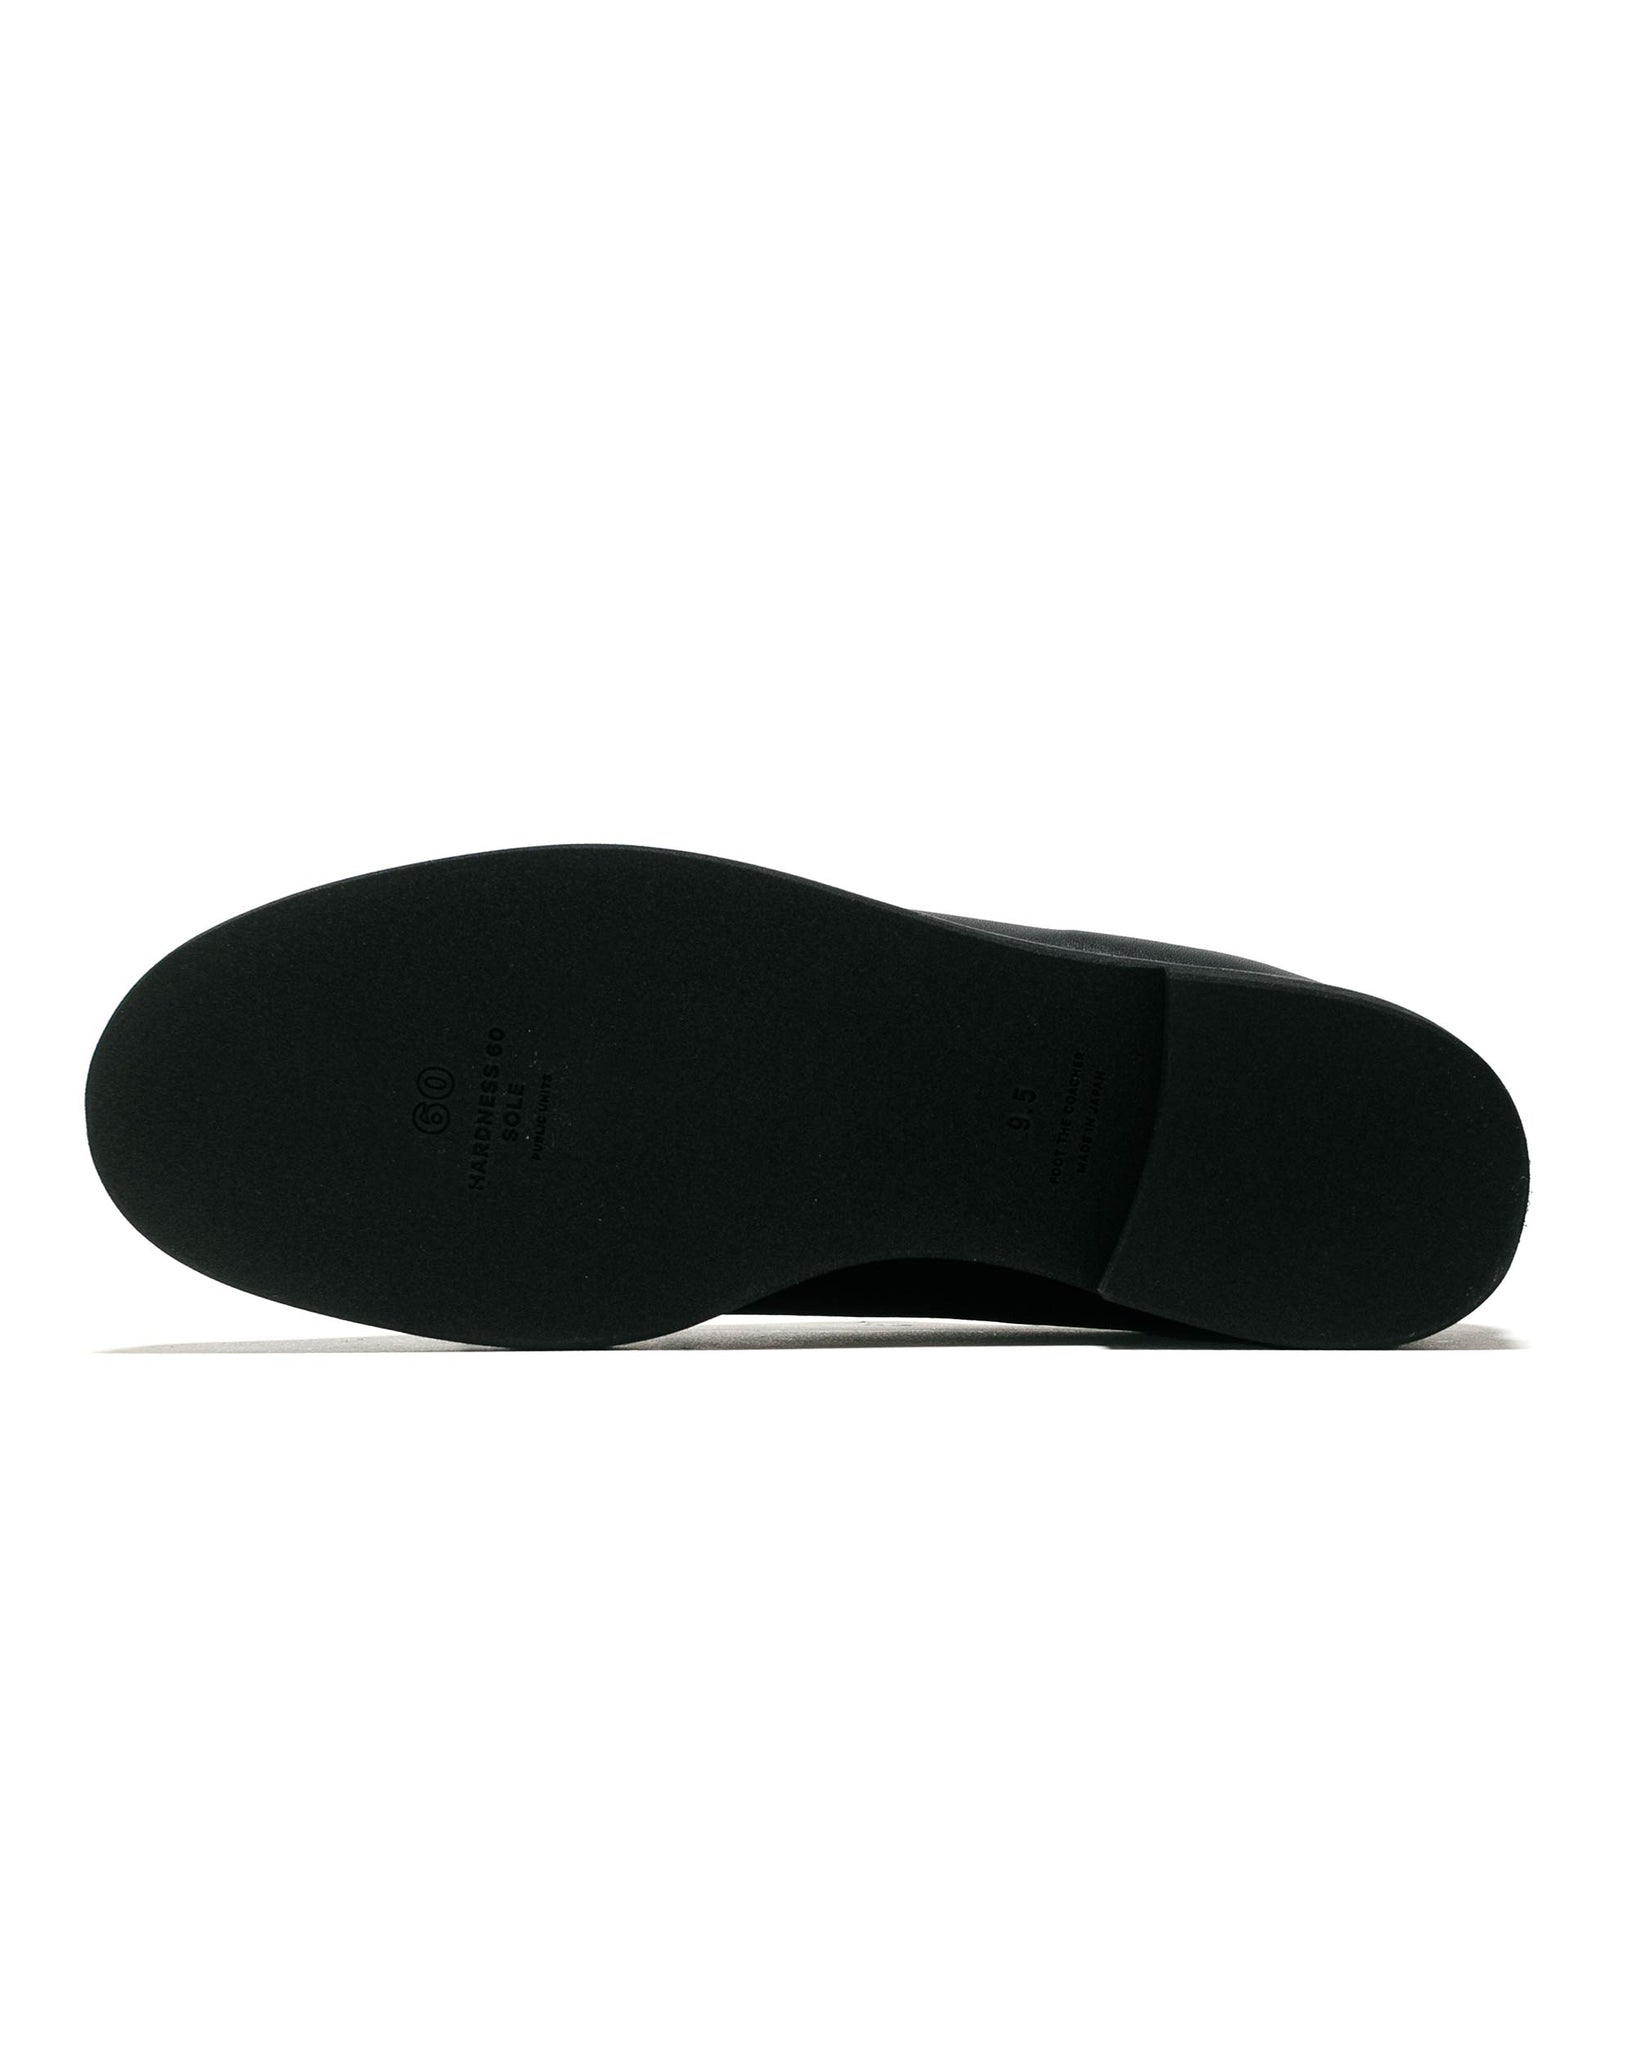 Foot The Coacher One-Piece Shoes Black sole